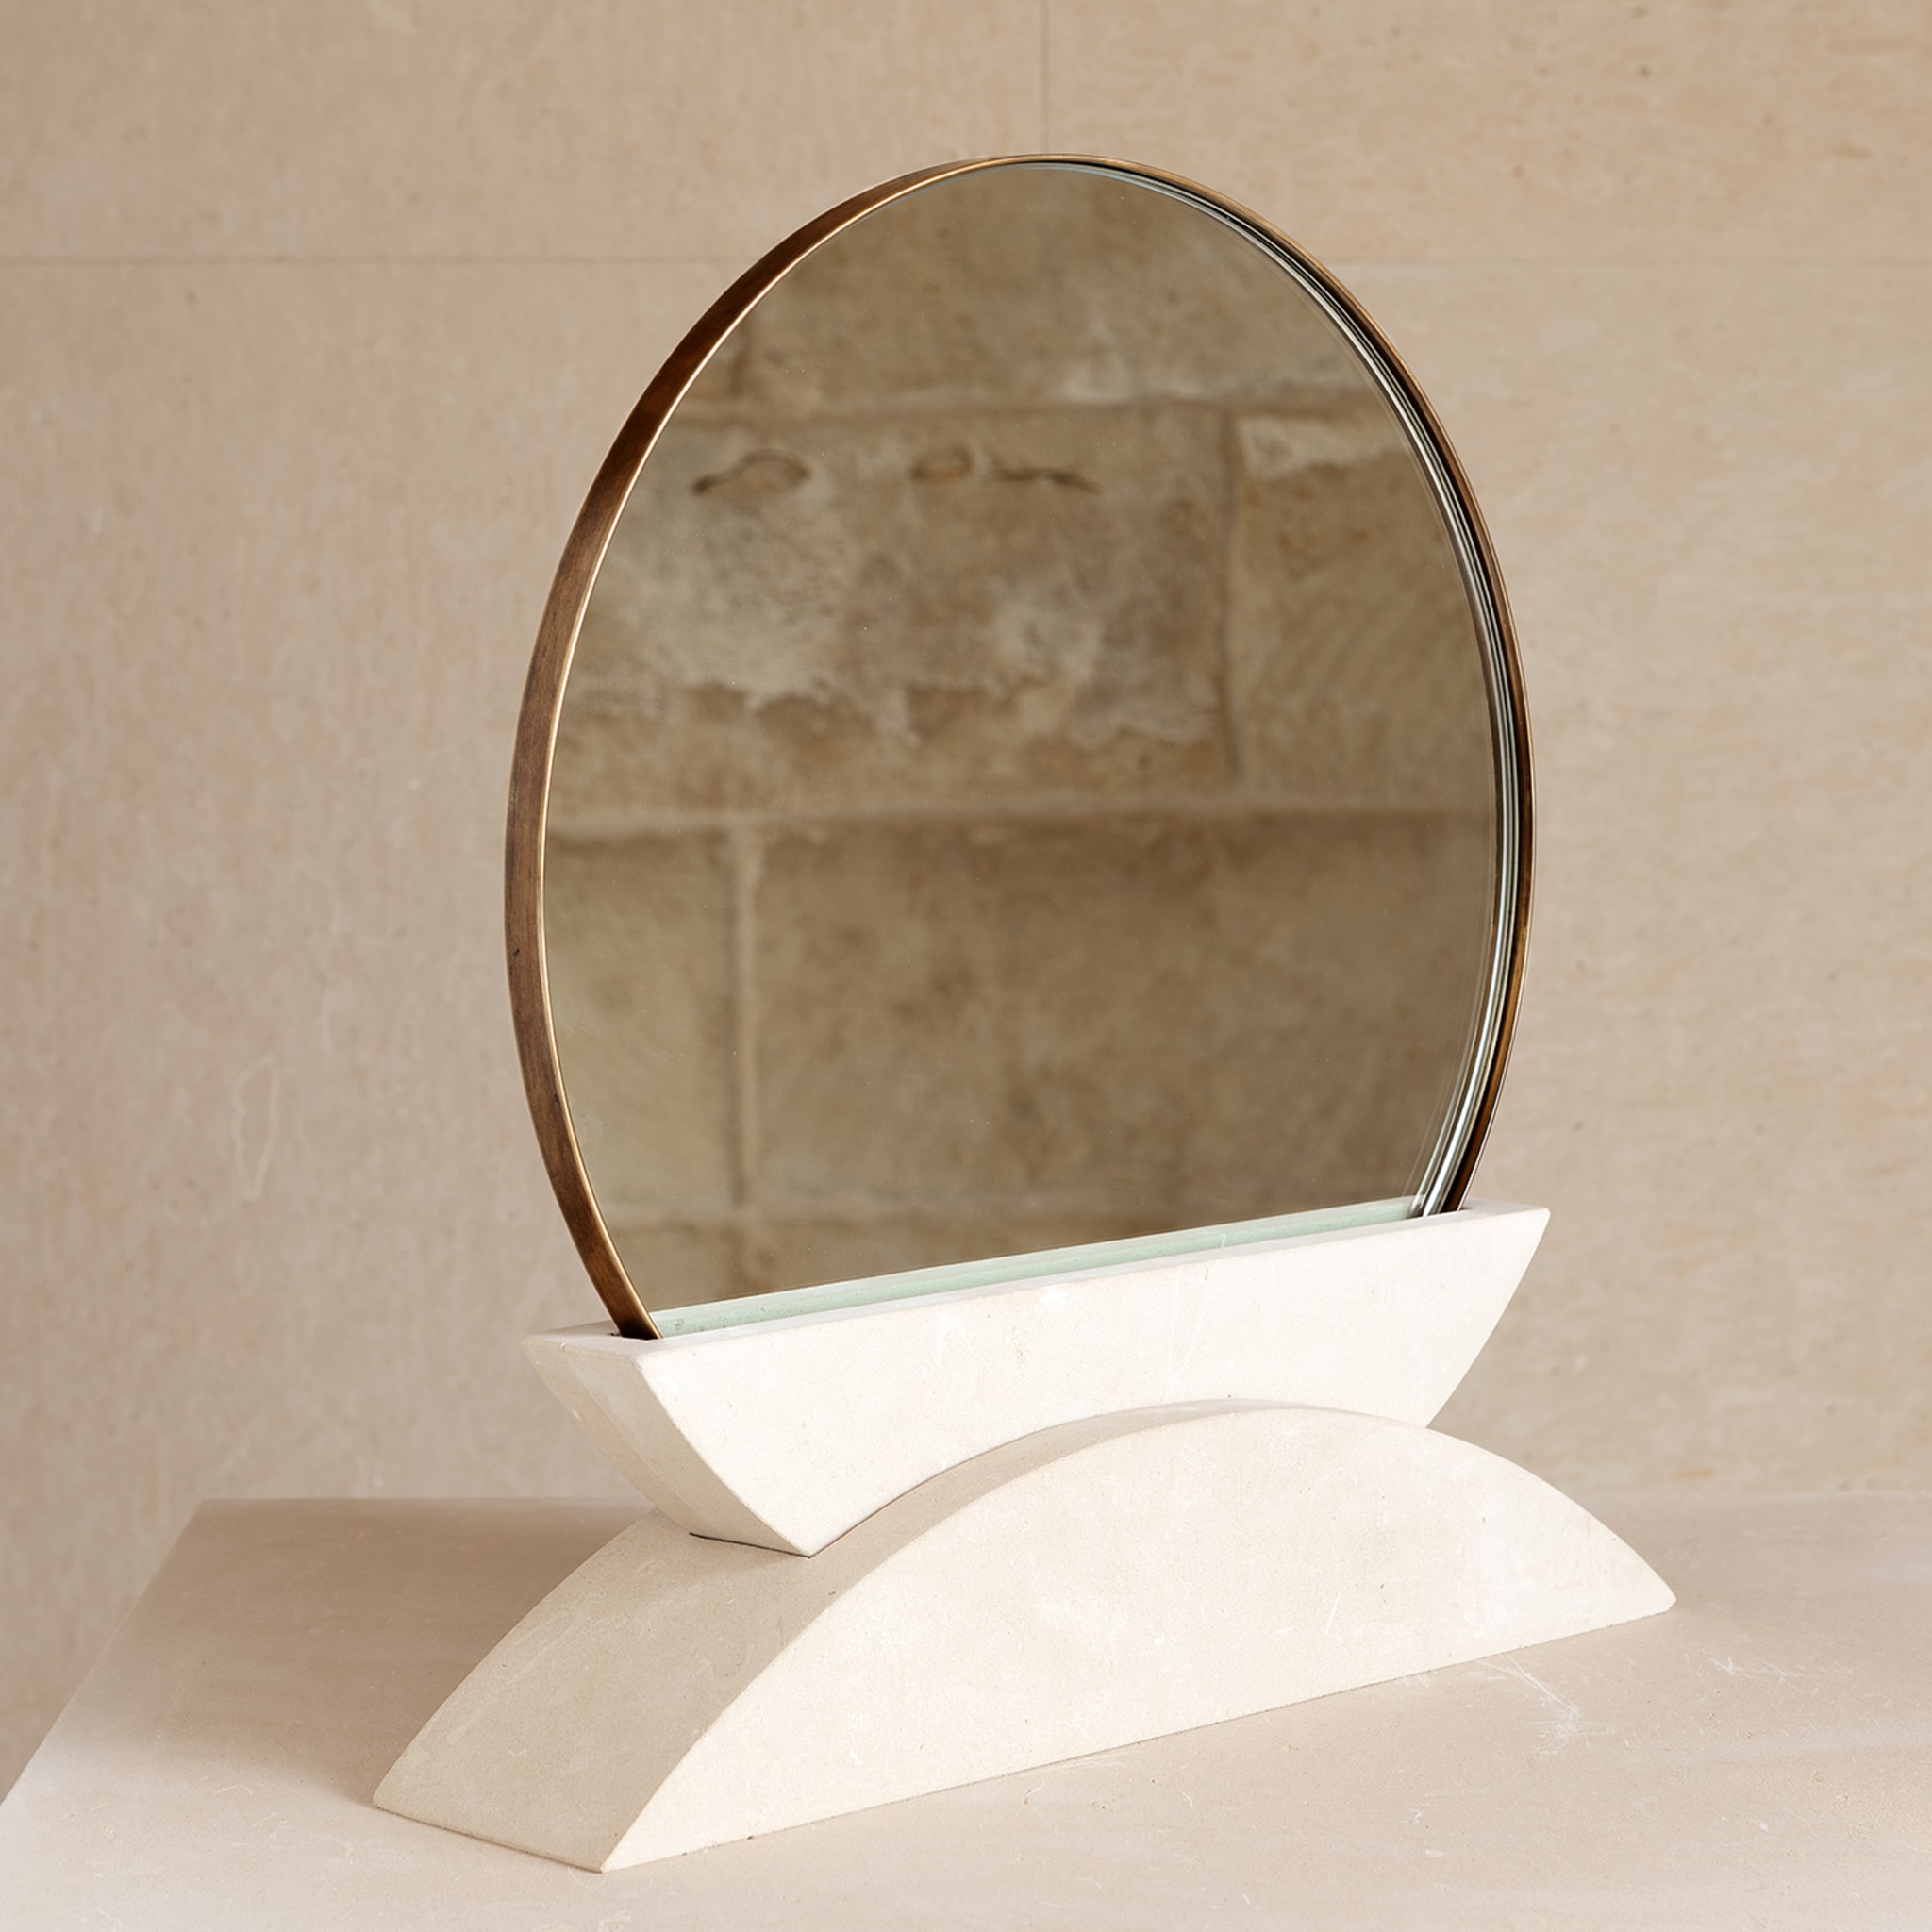 Orizzonte Tabletop Mirror by Apospersano - Alternative view 1